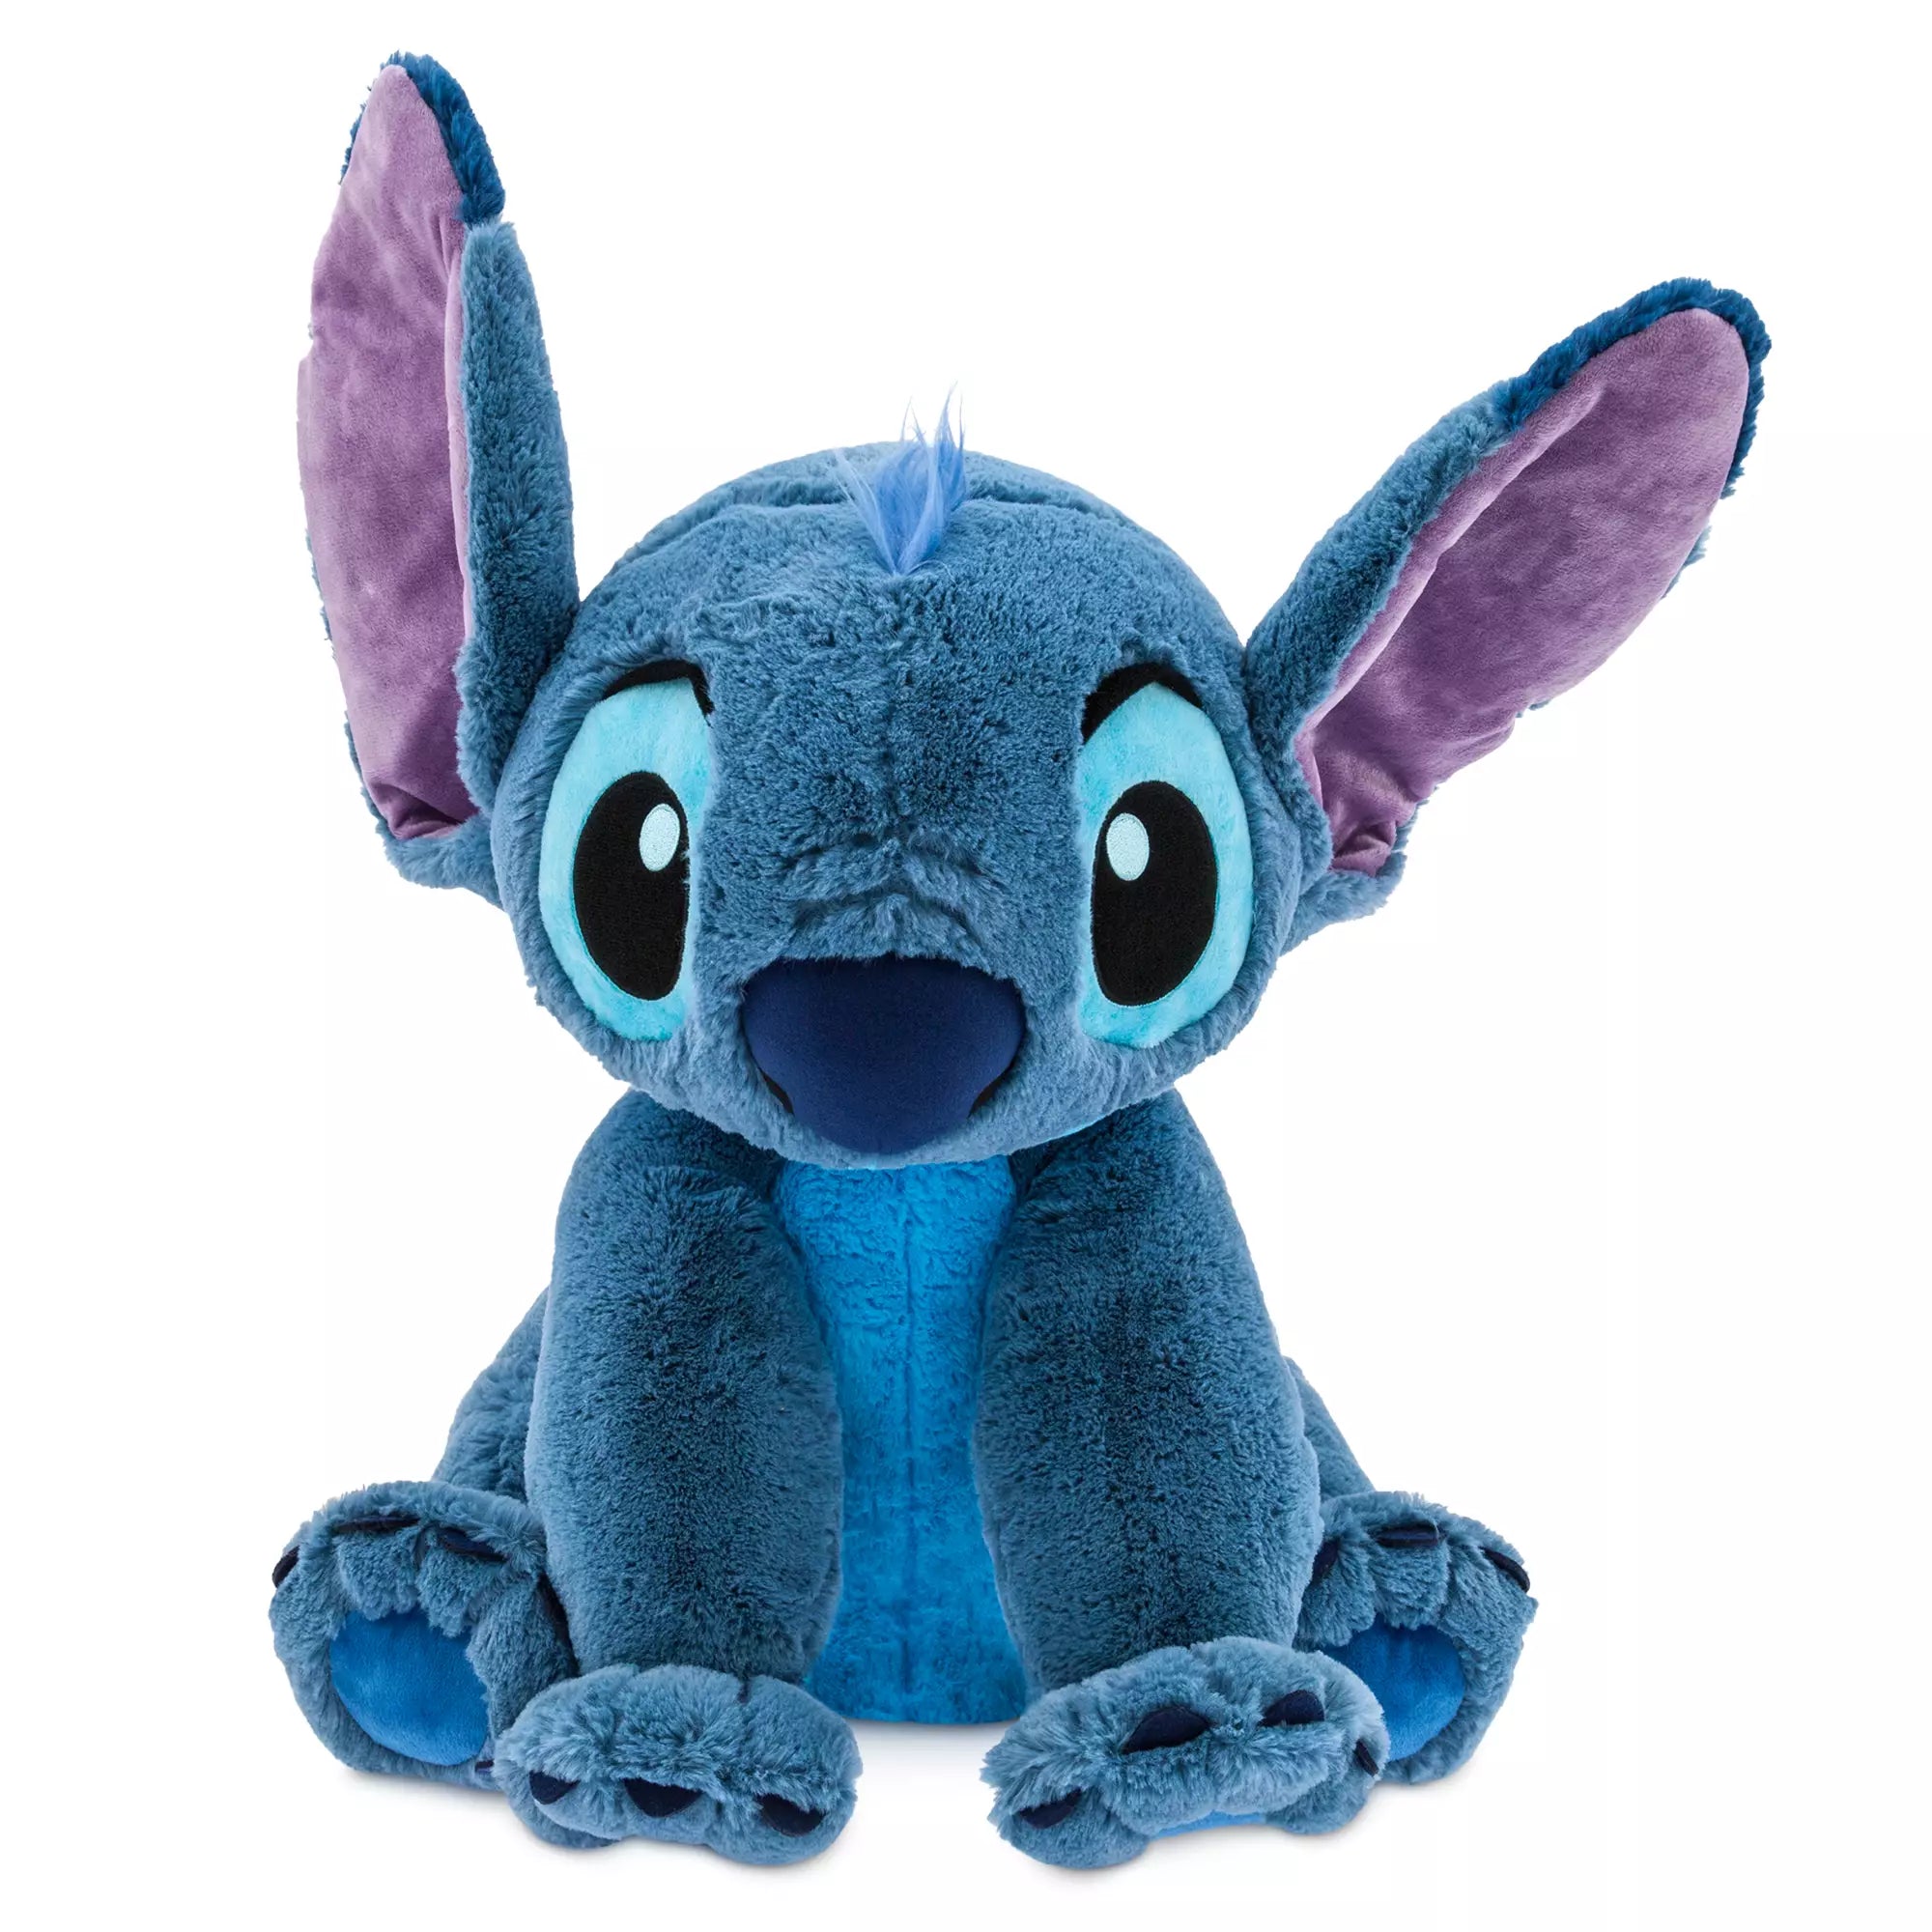 Disney Store Stitch Plush Soft Toy, Medium 15 3/4 inches, Lilo and